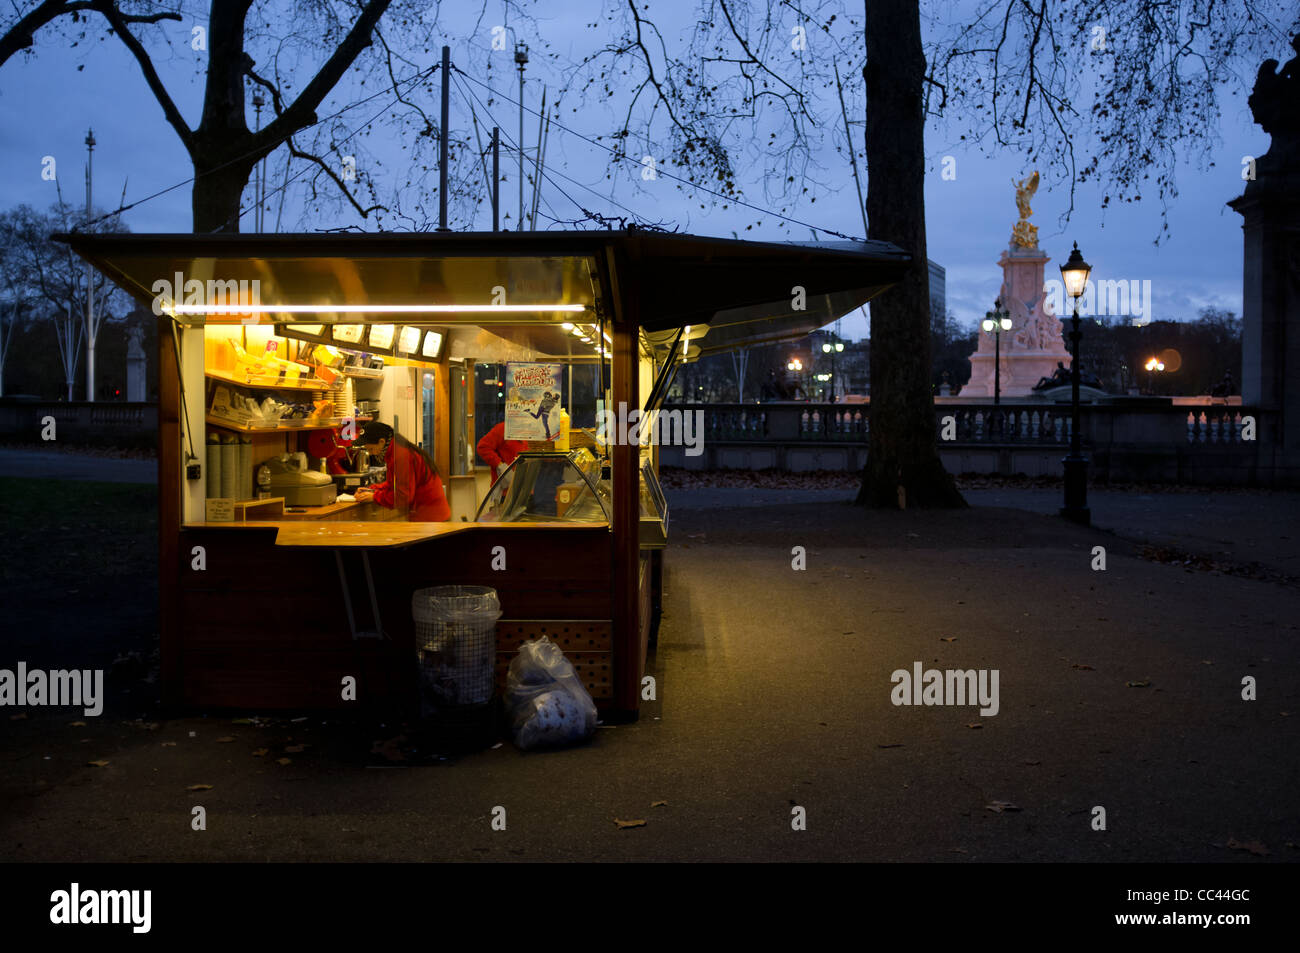 Cafe / Takeaway / Fast food counter near Buckingham Palace. Stock Photo